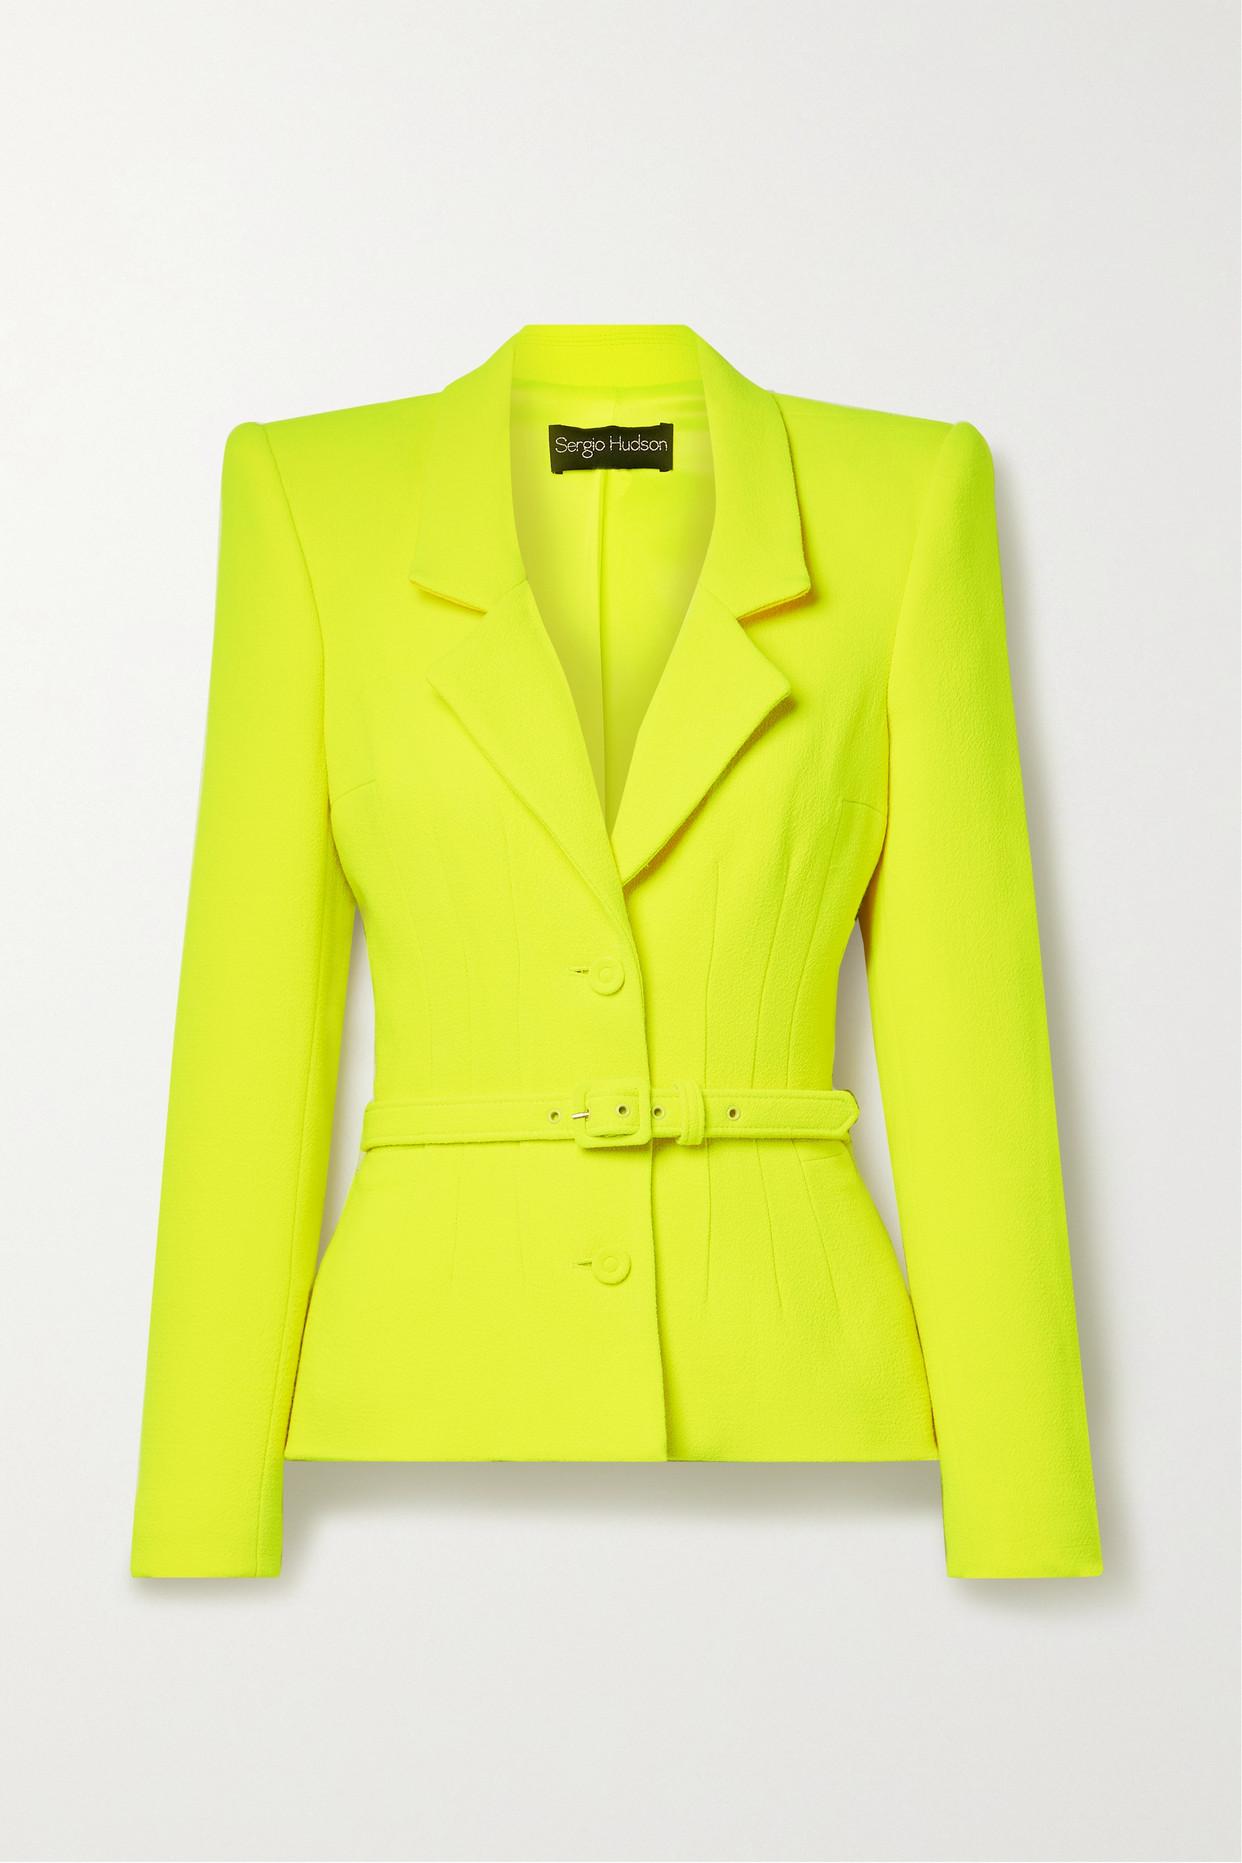 Sergio Hudson Belted Neon Wool-crepe Blazer in Yellow | Lyst